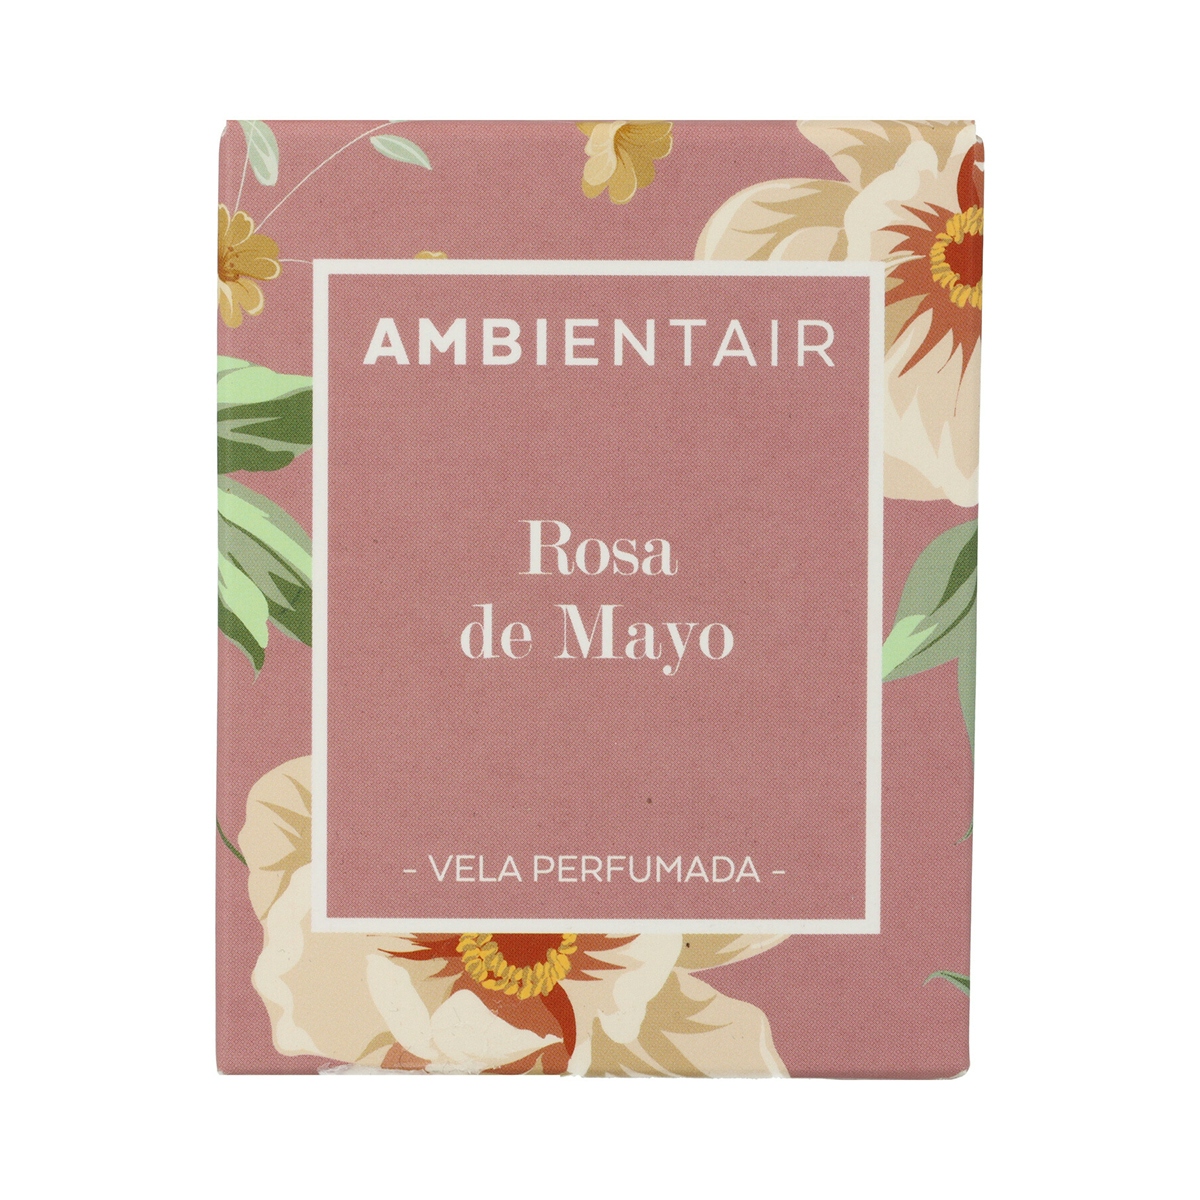 Vela 30h Rosa de Mayo Floral AMBIENT AIR 1 ud